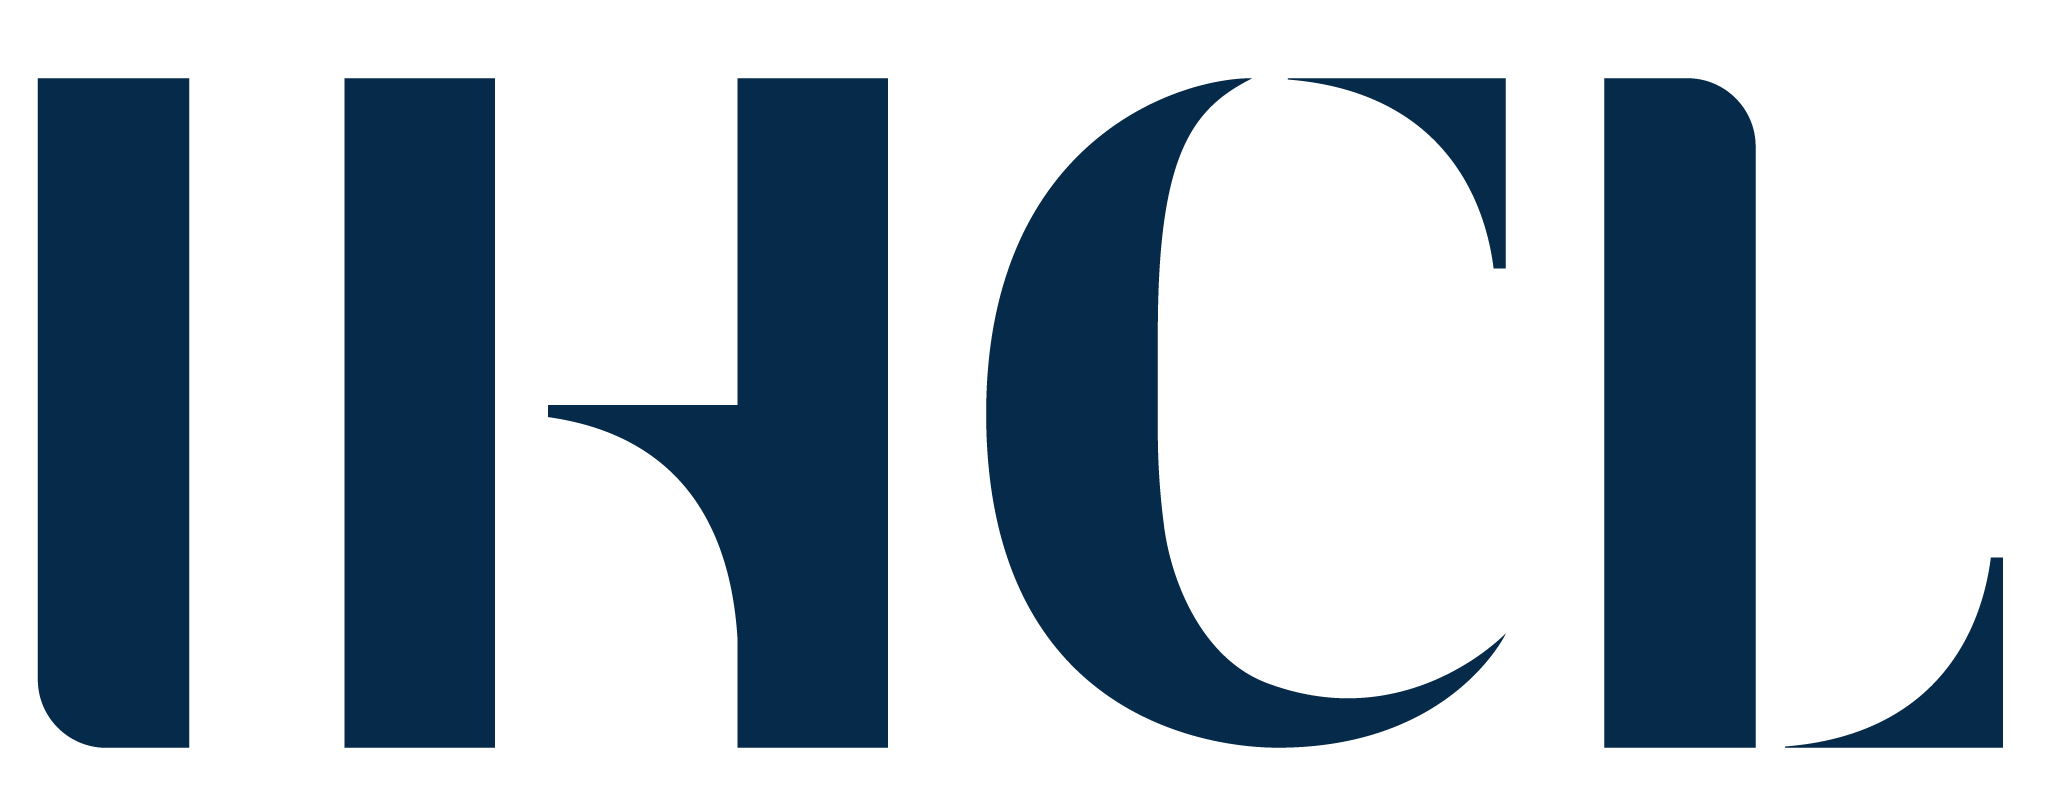 ihcl logo colour